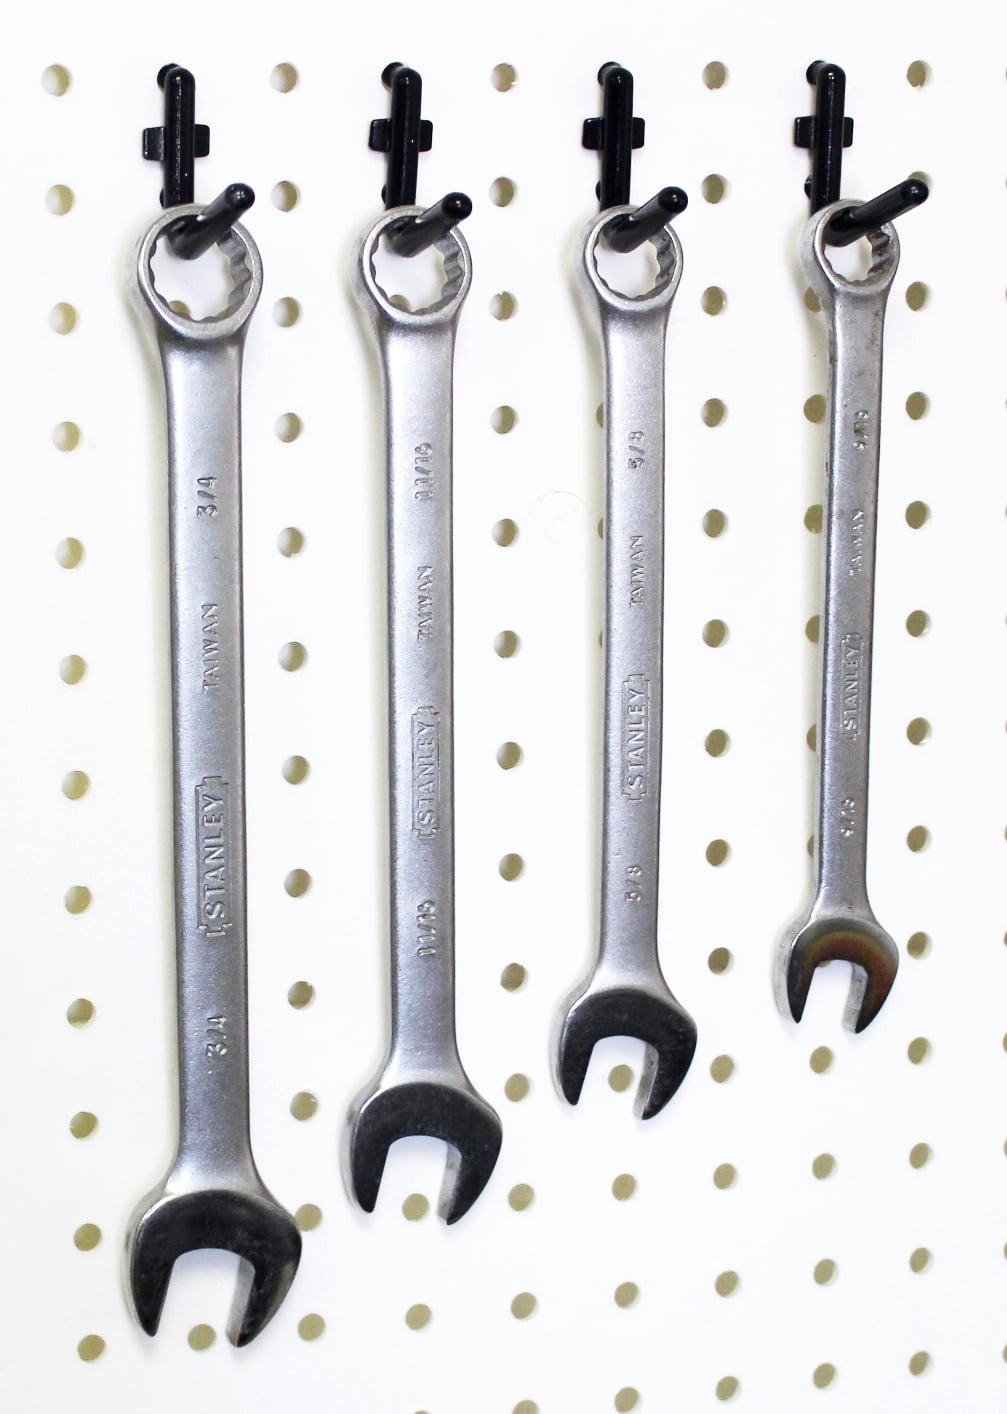 Garage kit Slatwall 50 each 1" & 2" All Metal Peg Hooks 1/8 to 1/4" Pegboard 